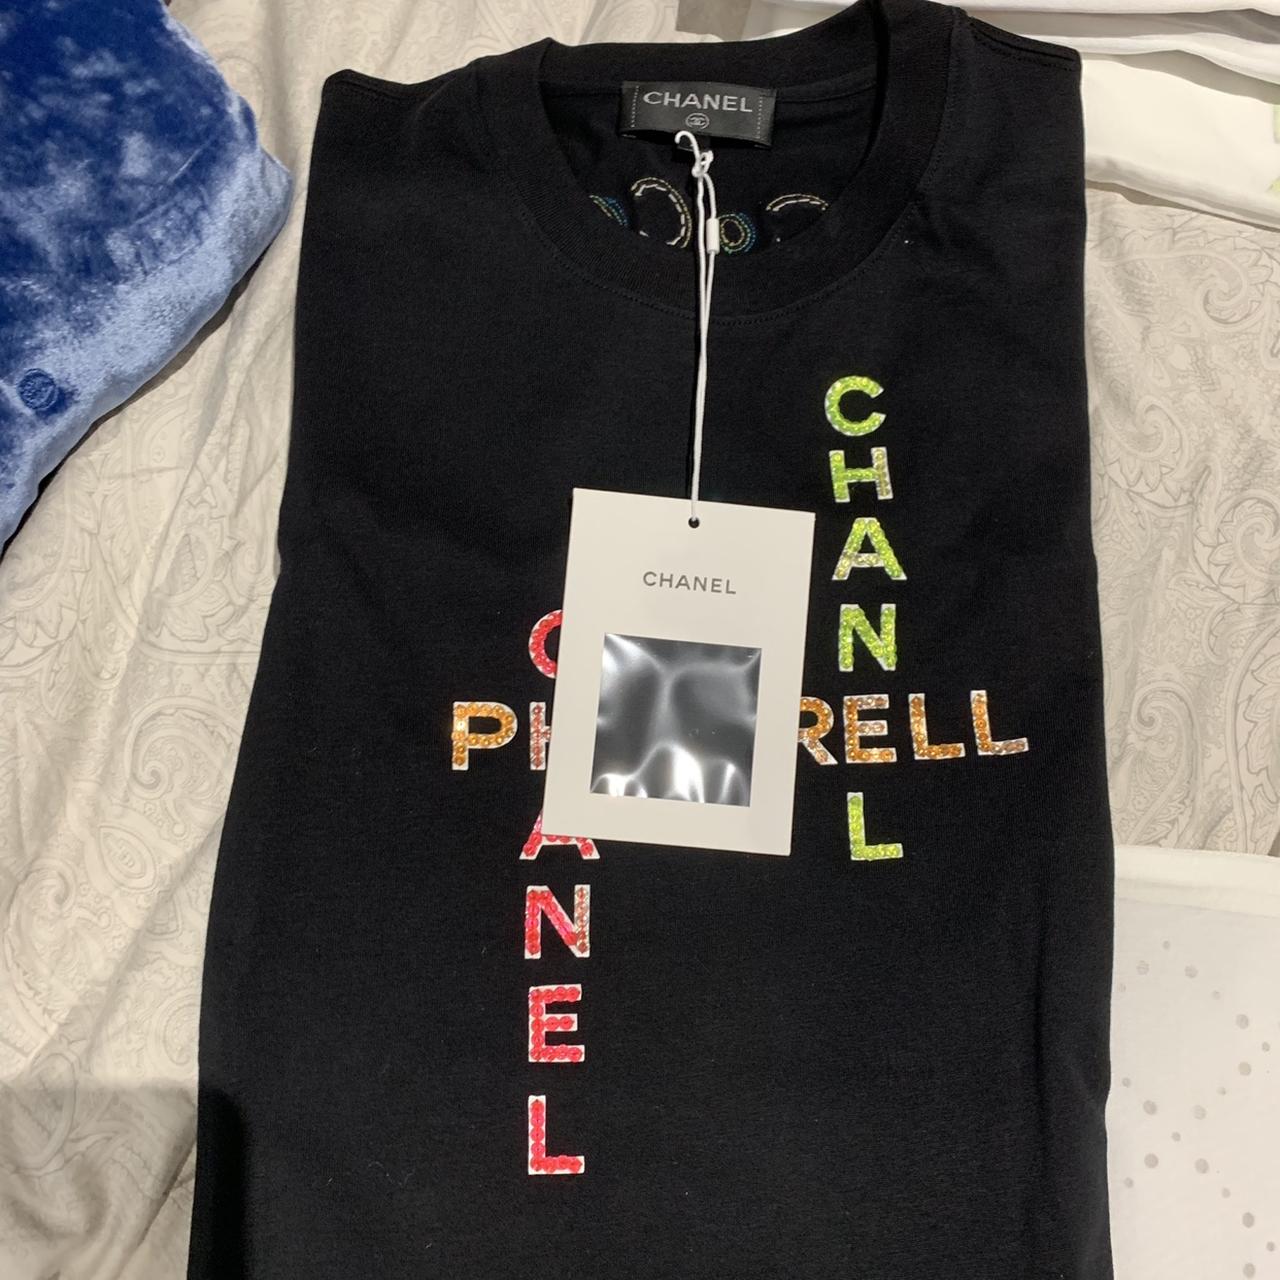 Chanel x Pharrell sneakers / brand new / size EU43 /